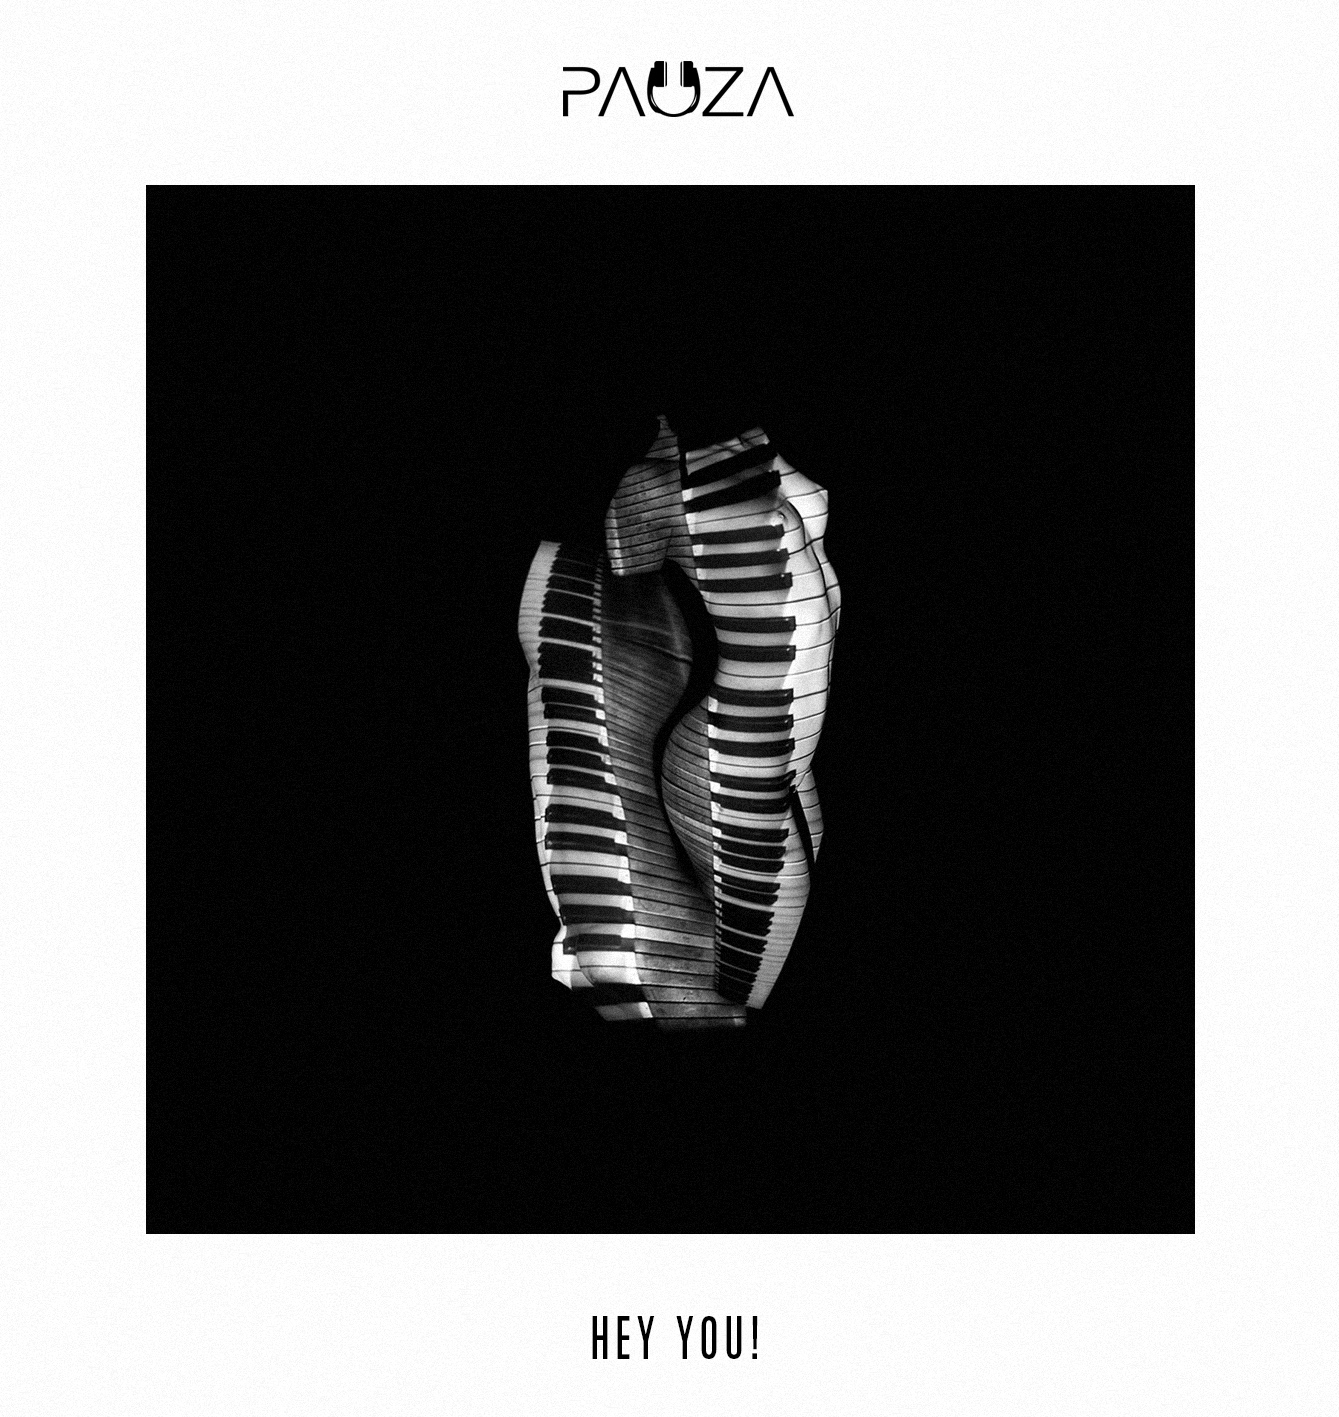 Portada del CD "Hey you!" de PAUZA. Diseño: Sergio Gonzalez Ferrer.